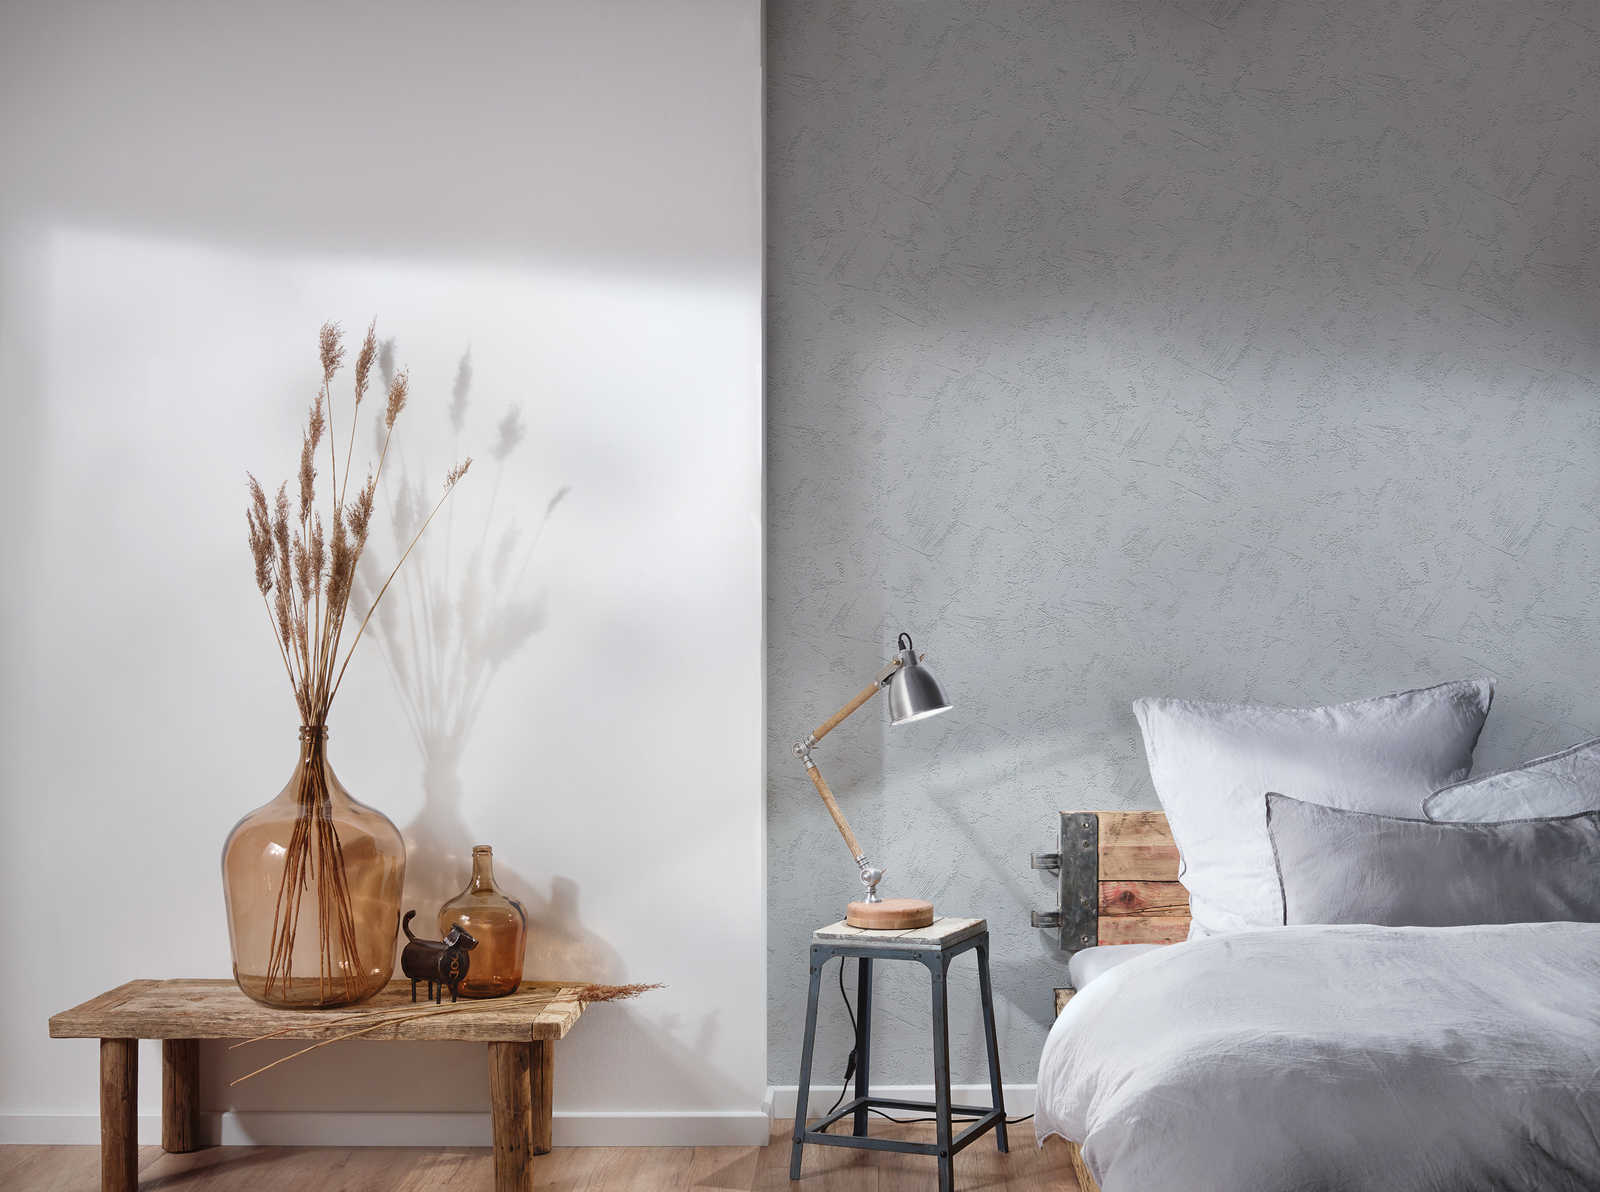             Wallpaper plaster look with foam structure pattern - grey
        